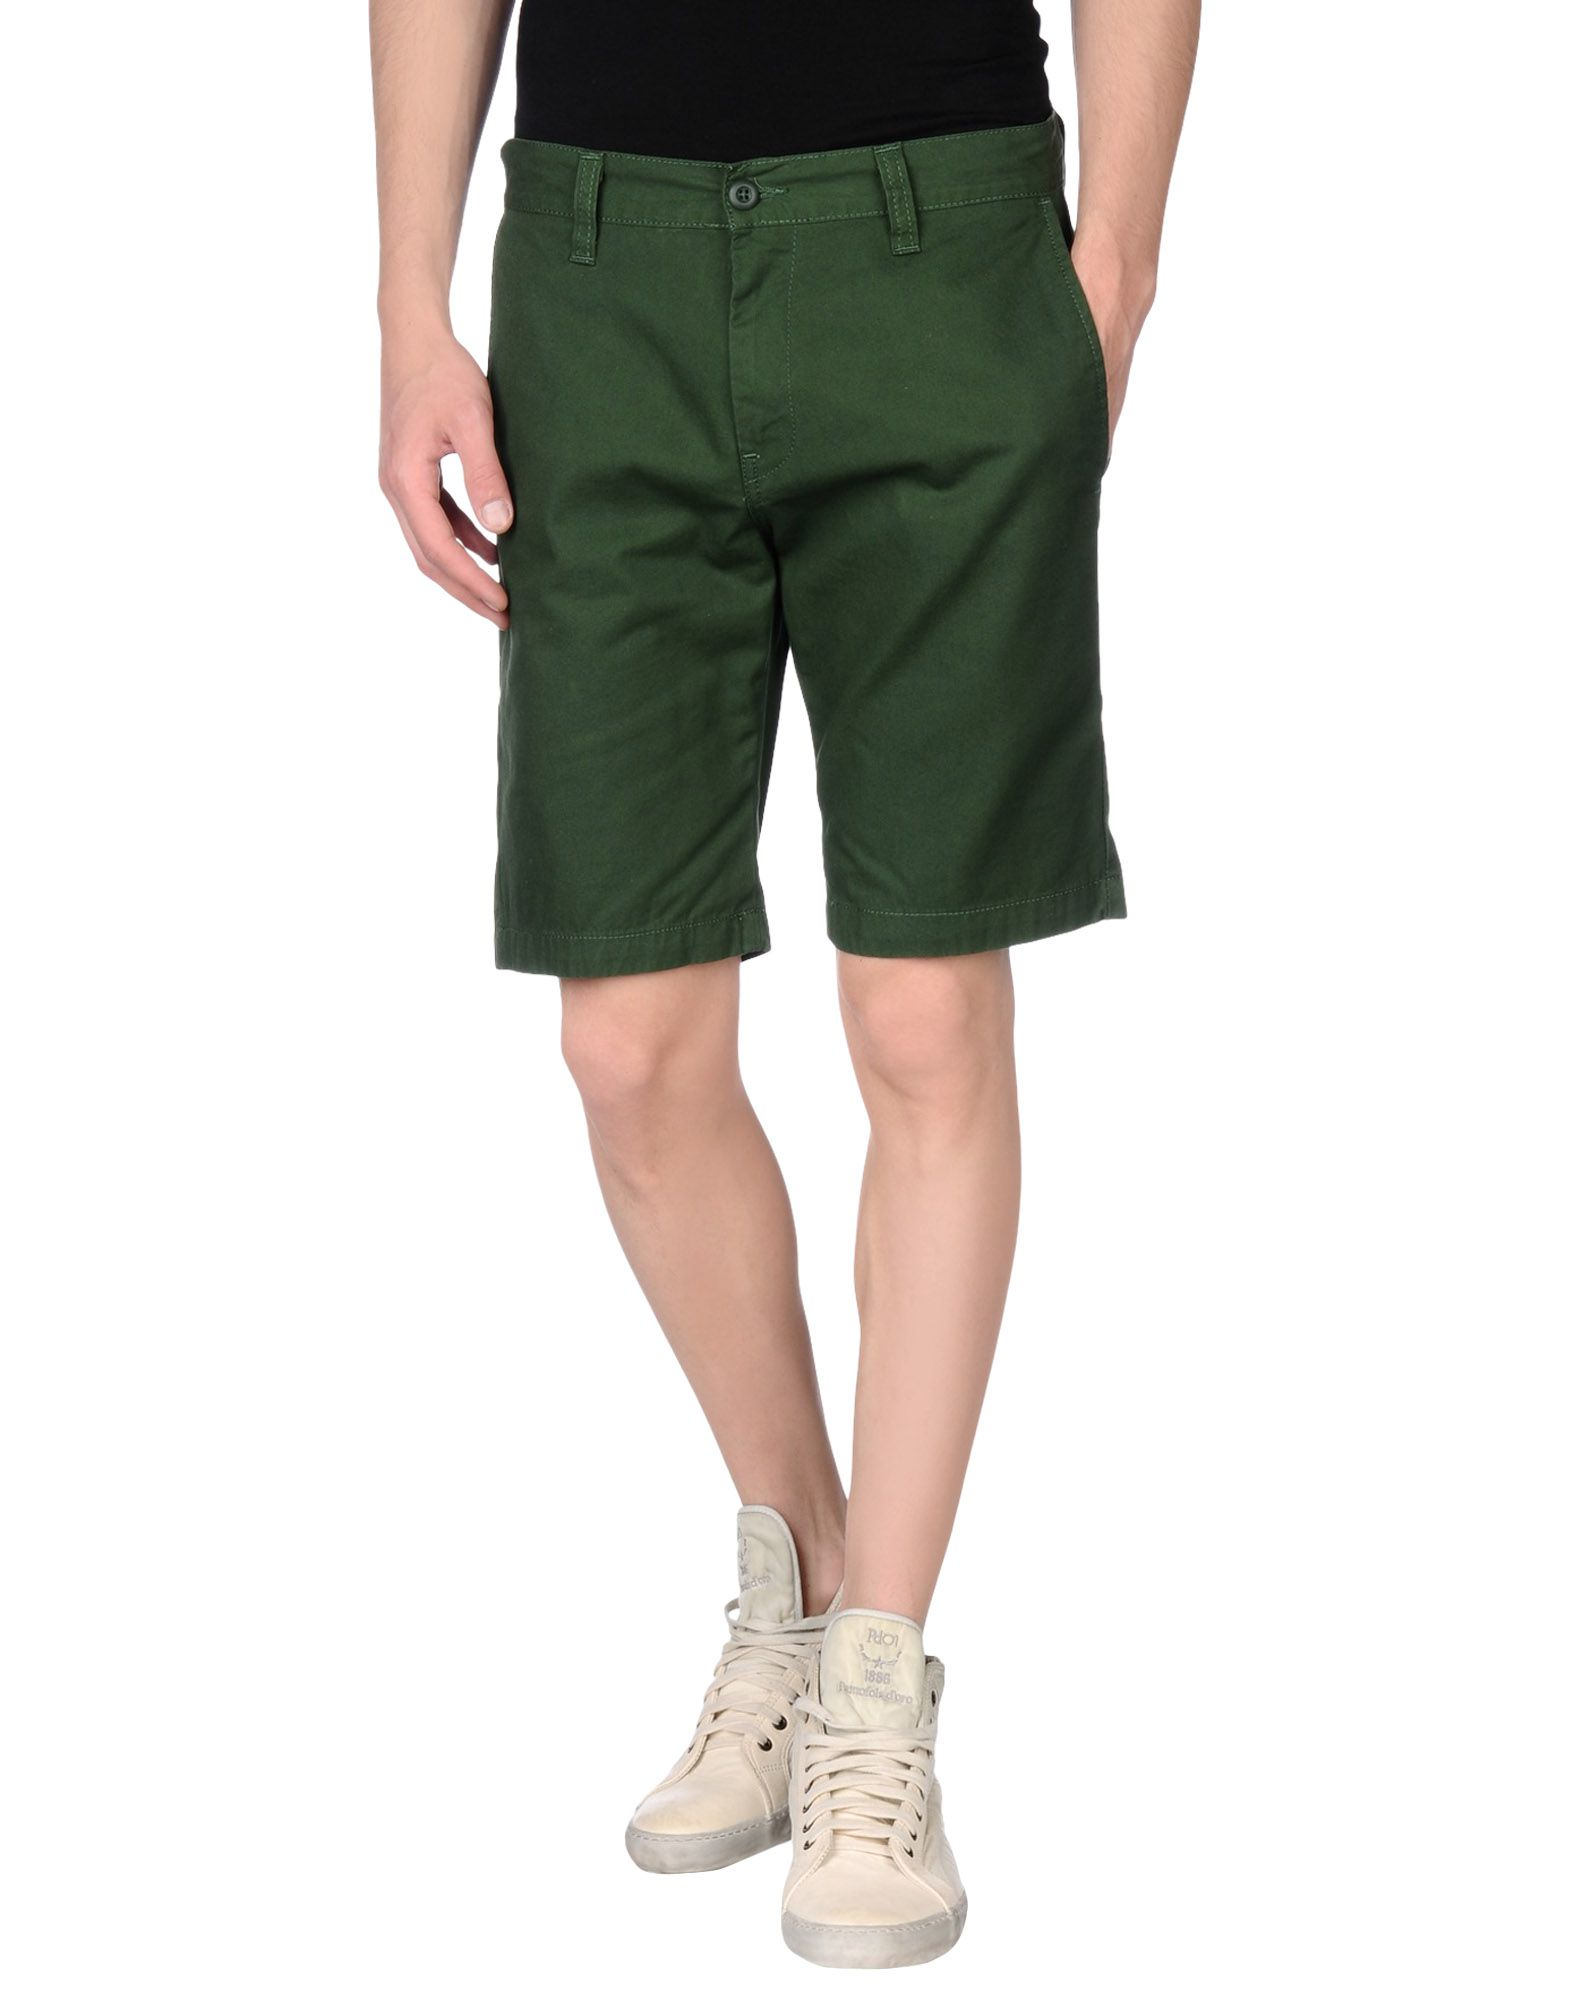 Lyst - Carhartt Bermuda Shorts in Green for Men